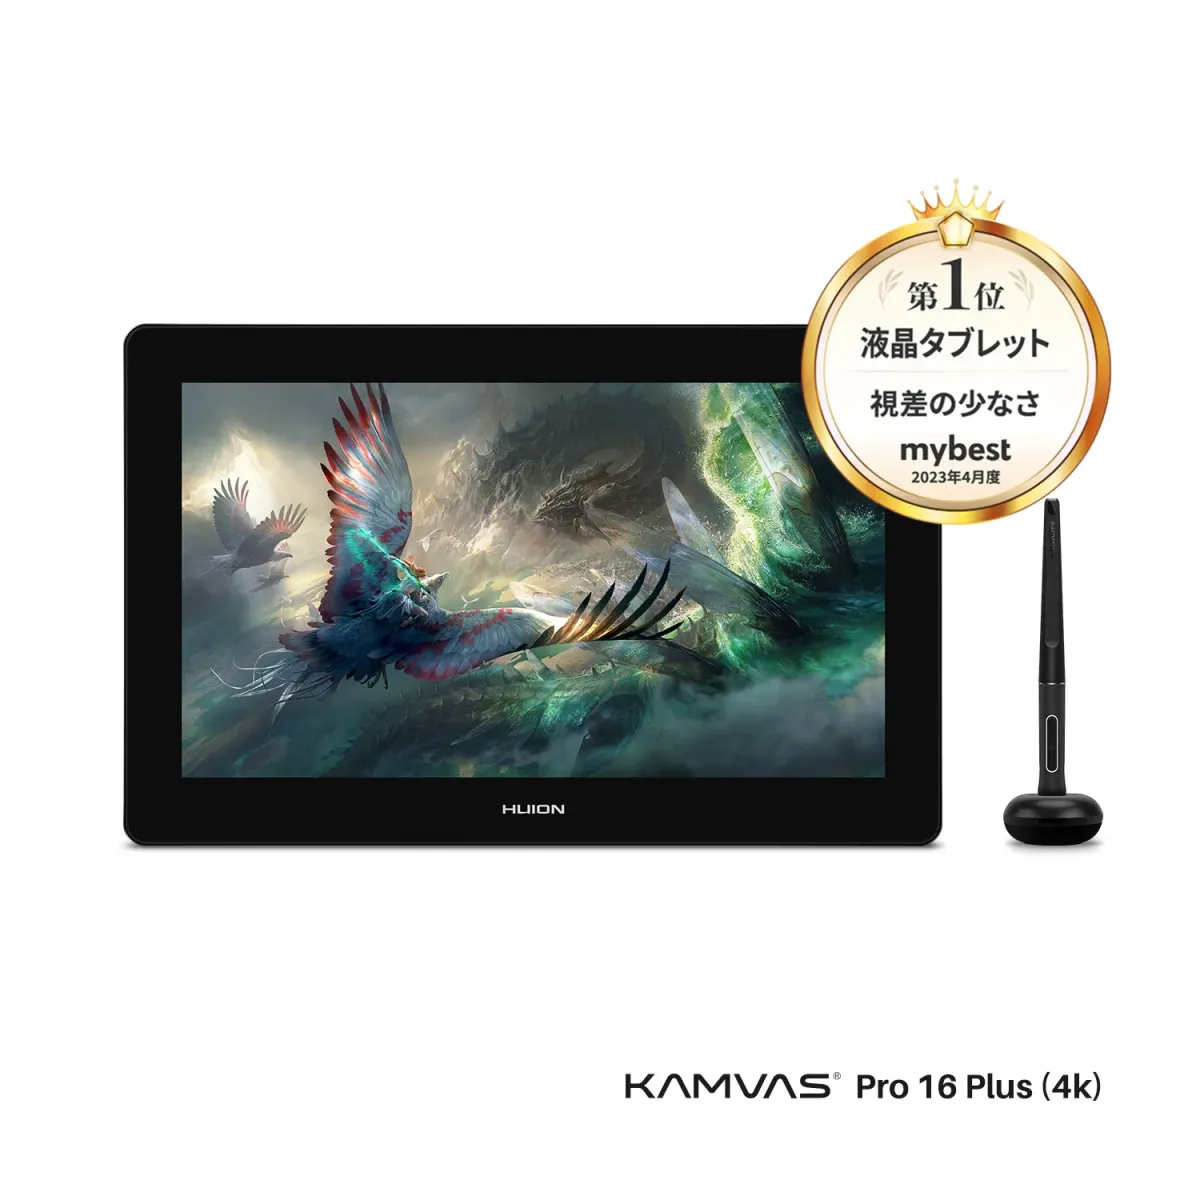 Kamvas Pro 16（4K）| Kamvas Pro 16 Plus（4K）UHD液晶ペンタブレット